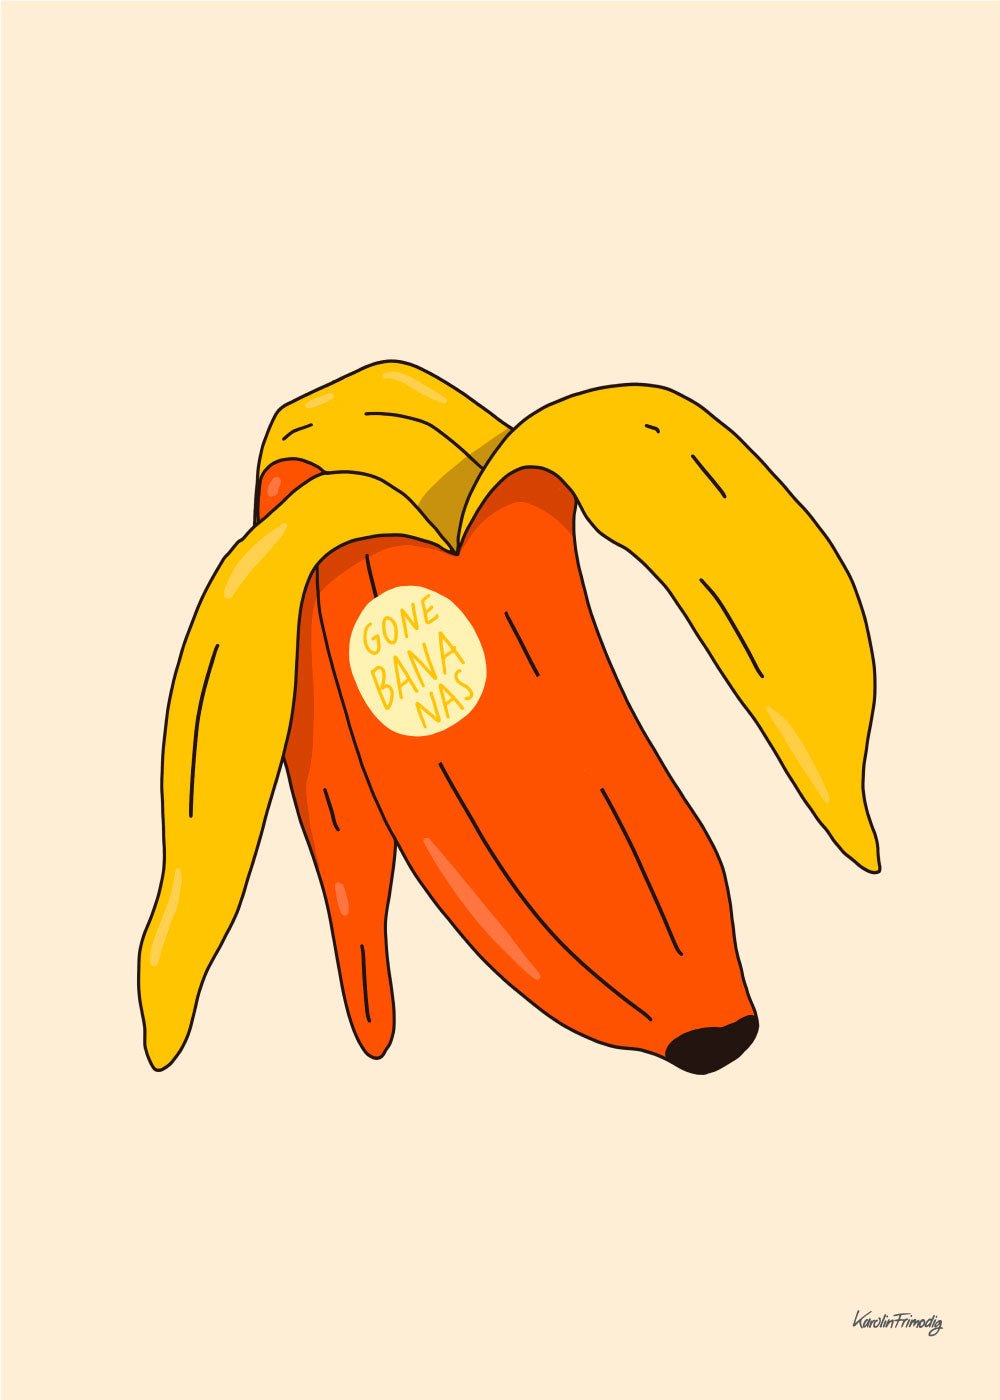 Gone Bananas Poster - #shop_name